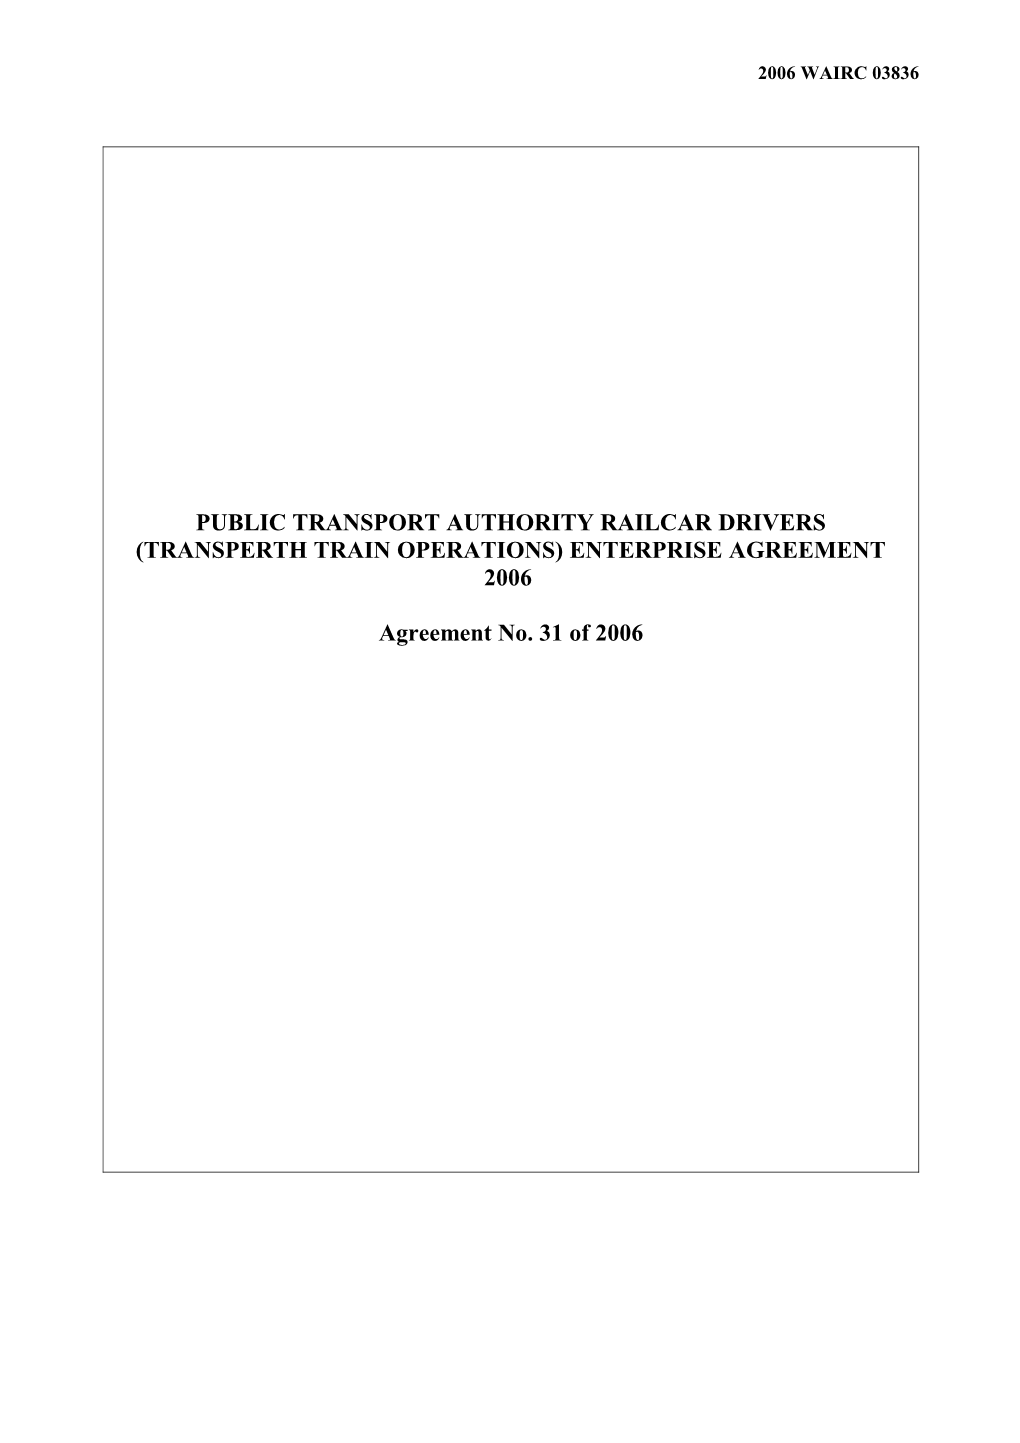 Public Transport Authority Railcar Drivers (Transperth Train Operations) Enterprise Agreement